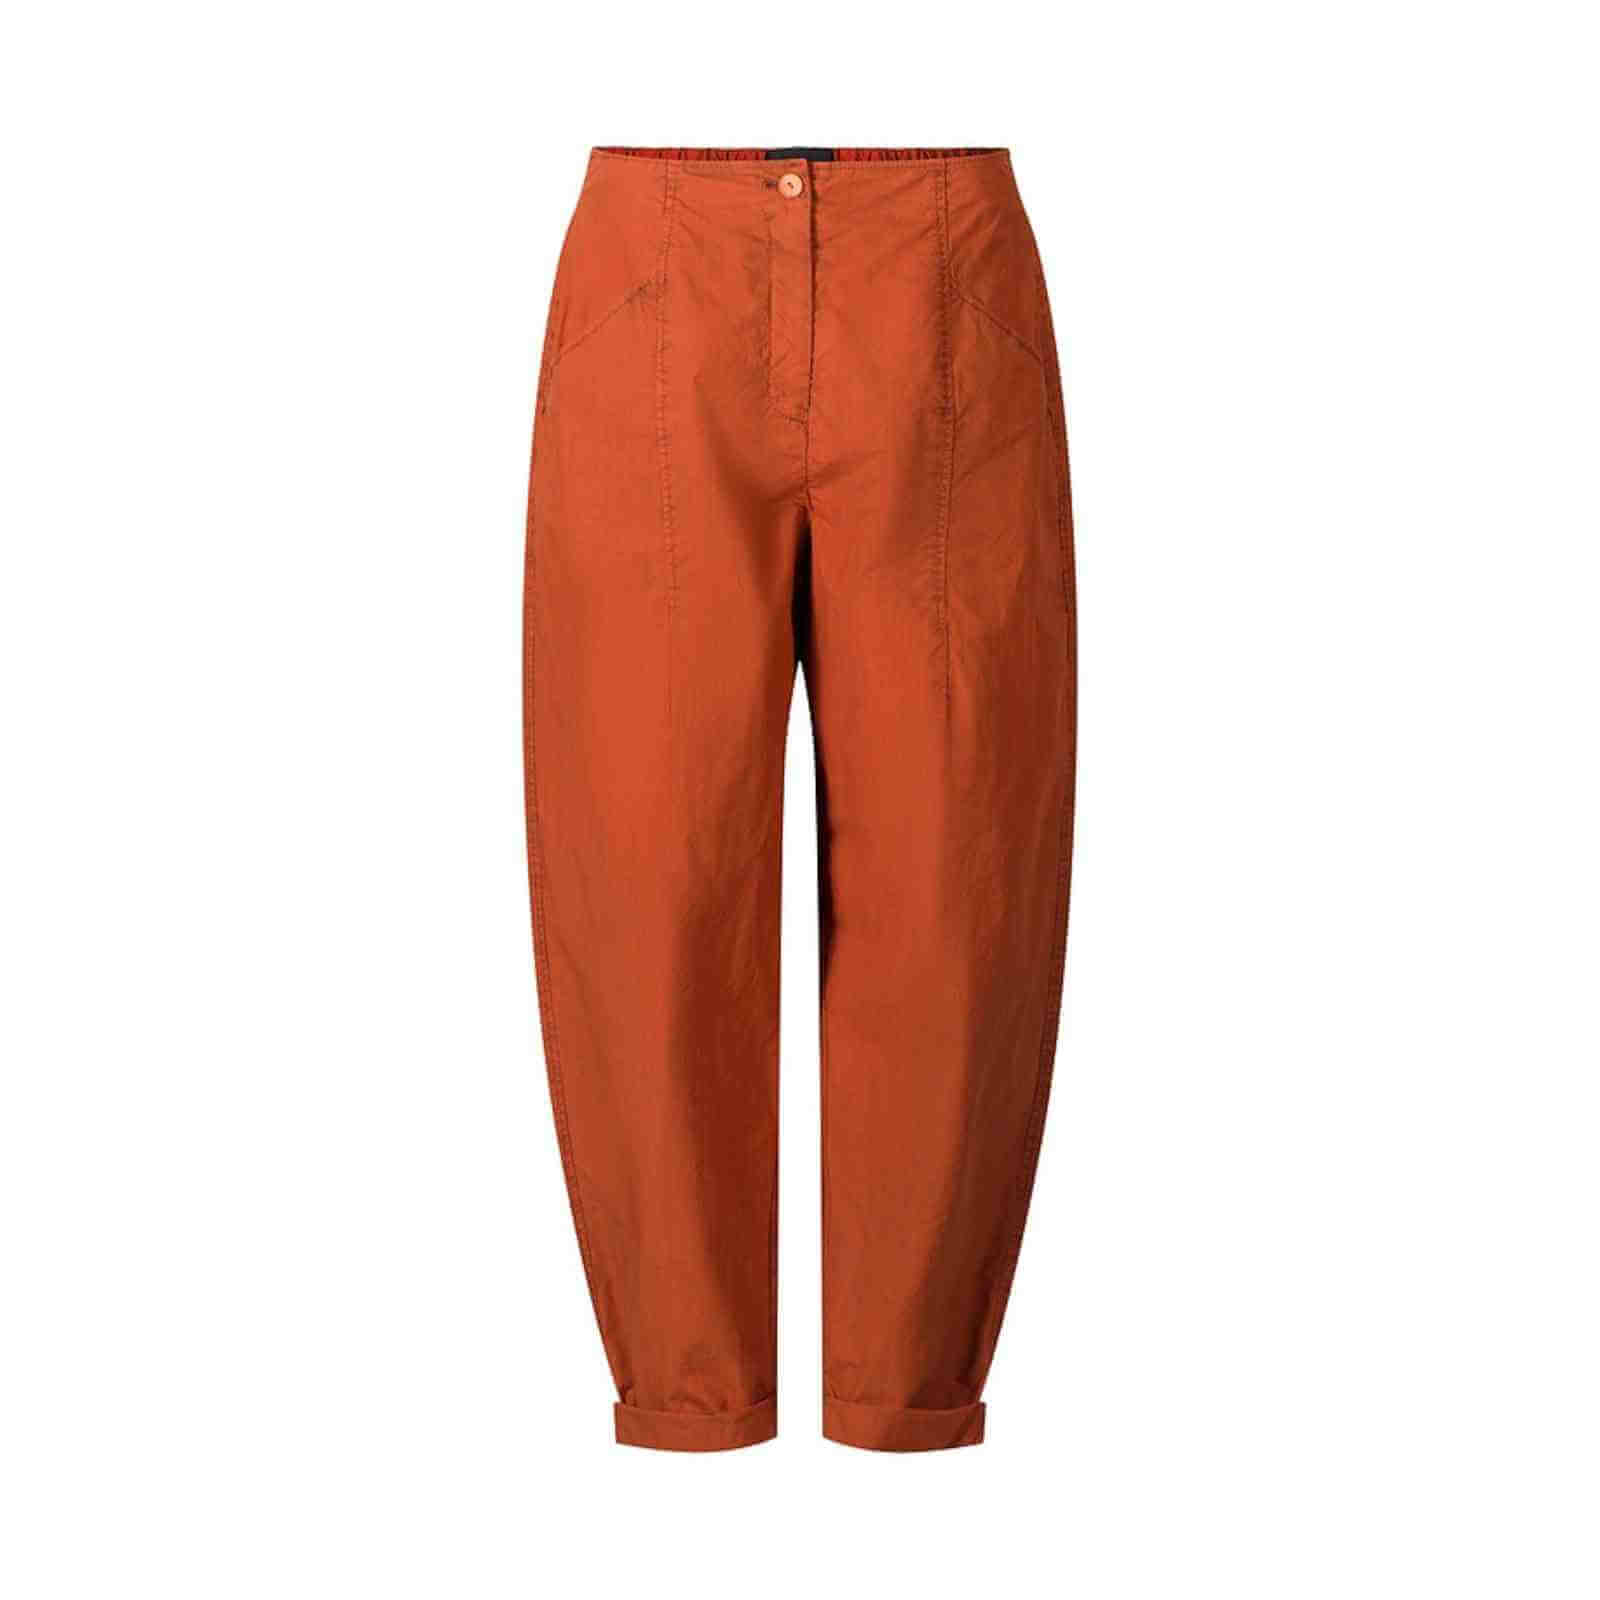 Oska bukser i 100% bomuld, model Tertia i spice orange